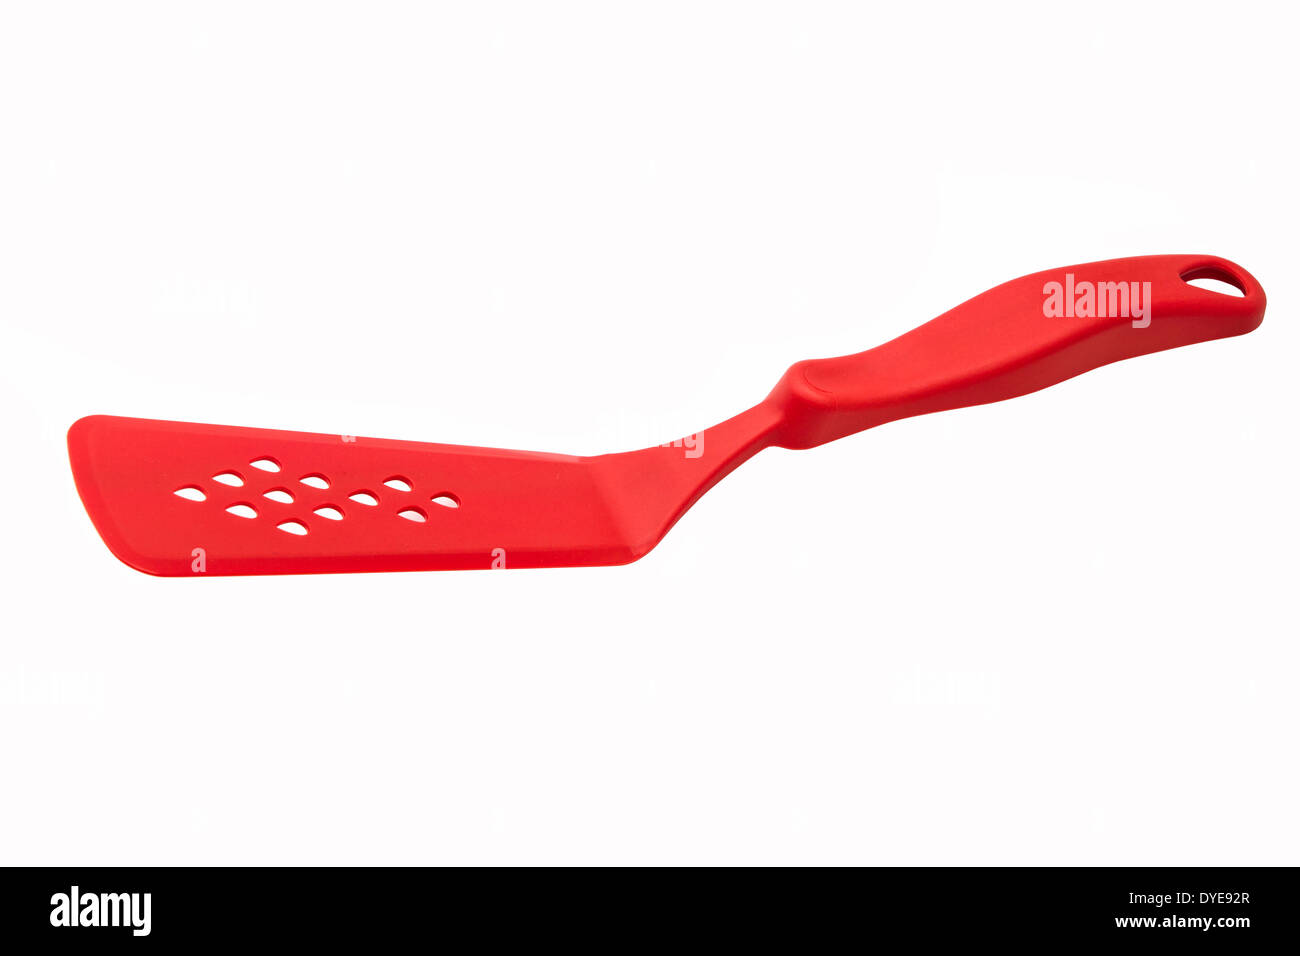 Red kitchen spatula on a white background Stock Photo